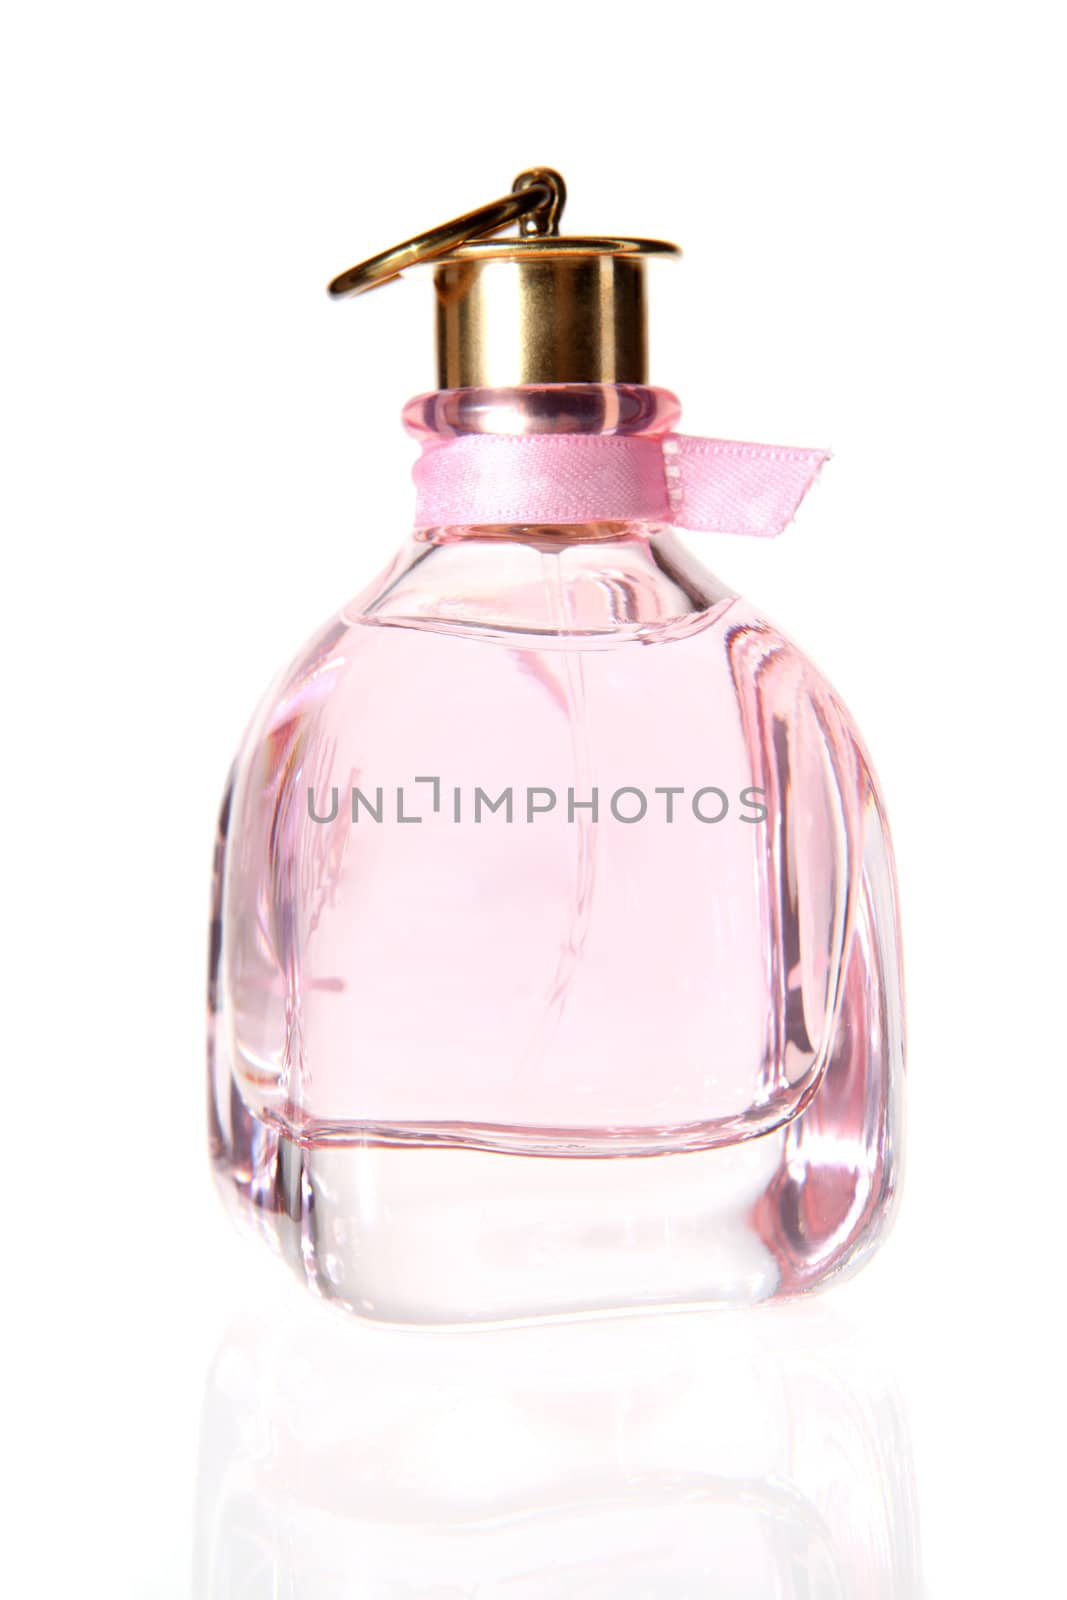 Perfume bottle on the white  by aptyp_kok